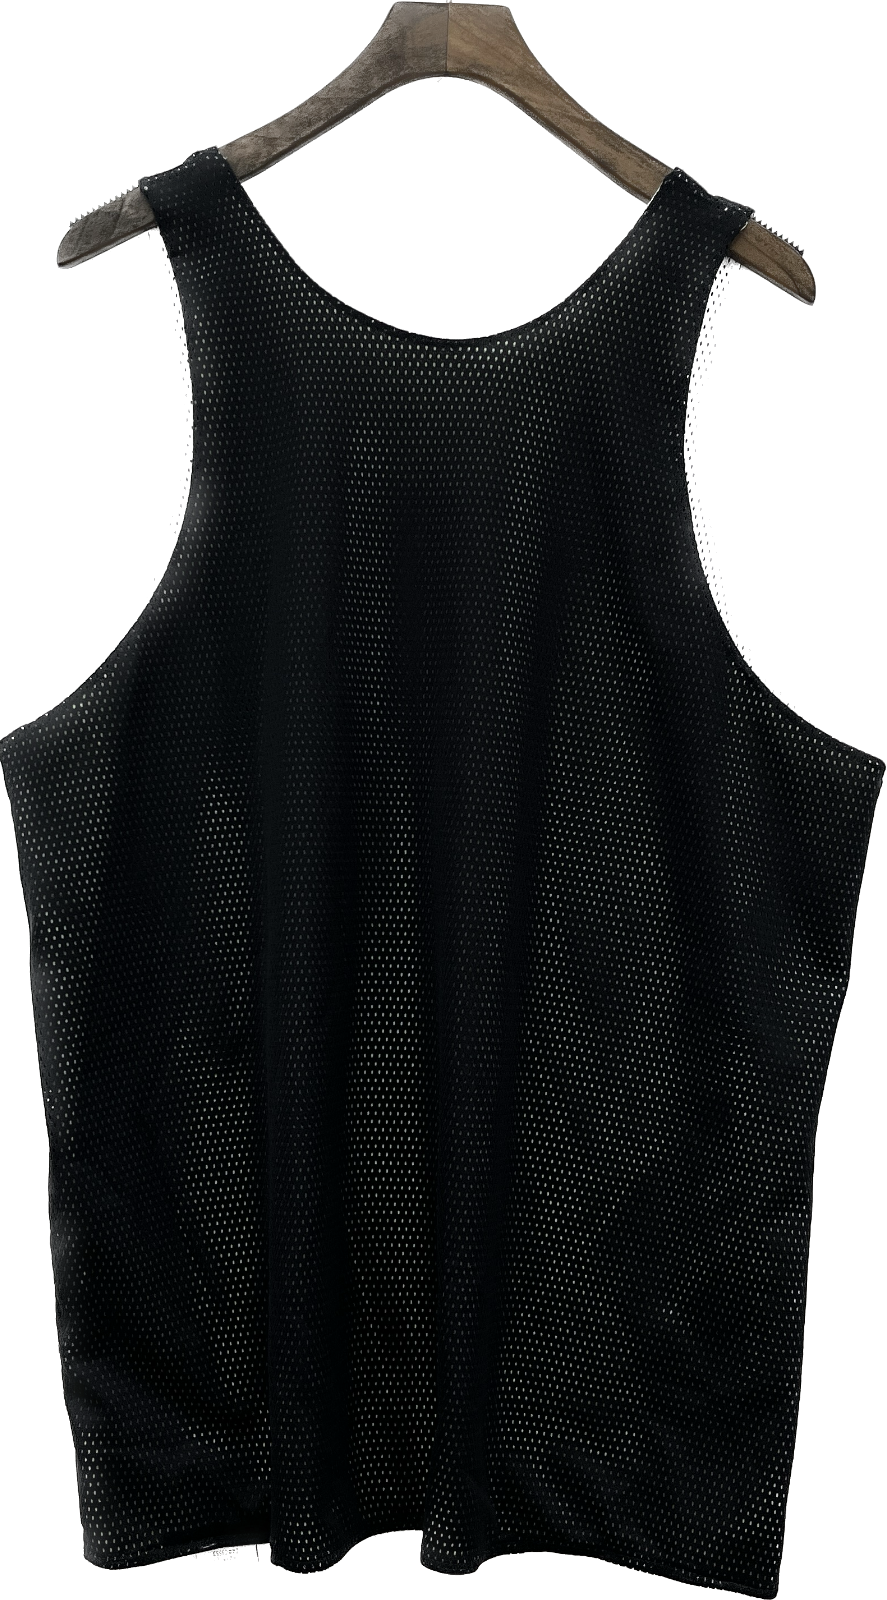 Vintage Nike Swoosh Logo Mesh Reversible Black White Sleeveless Jersey Size M